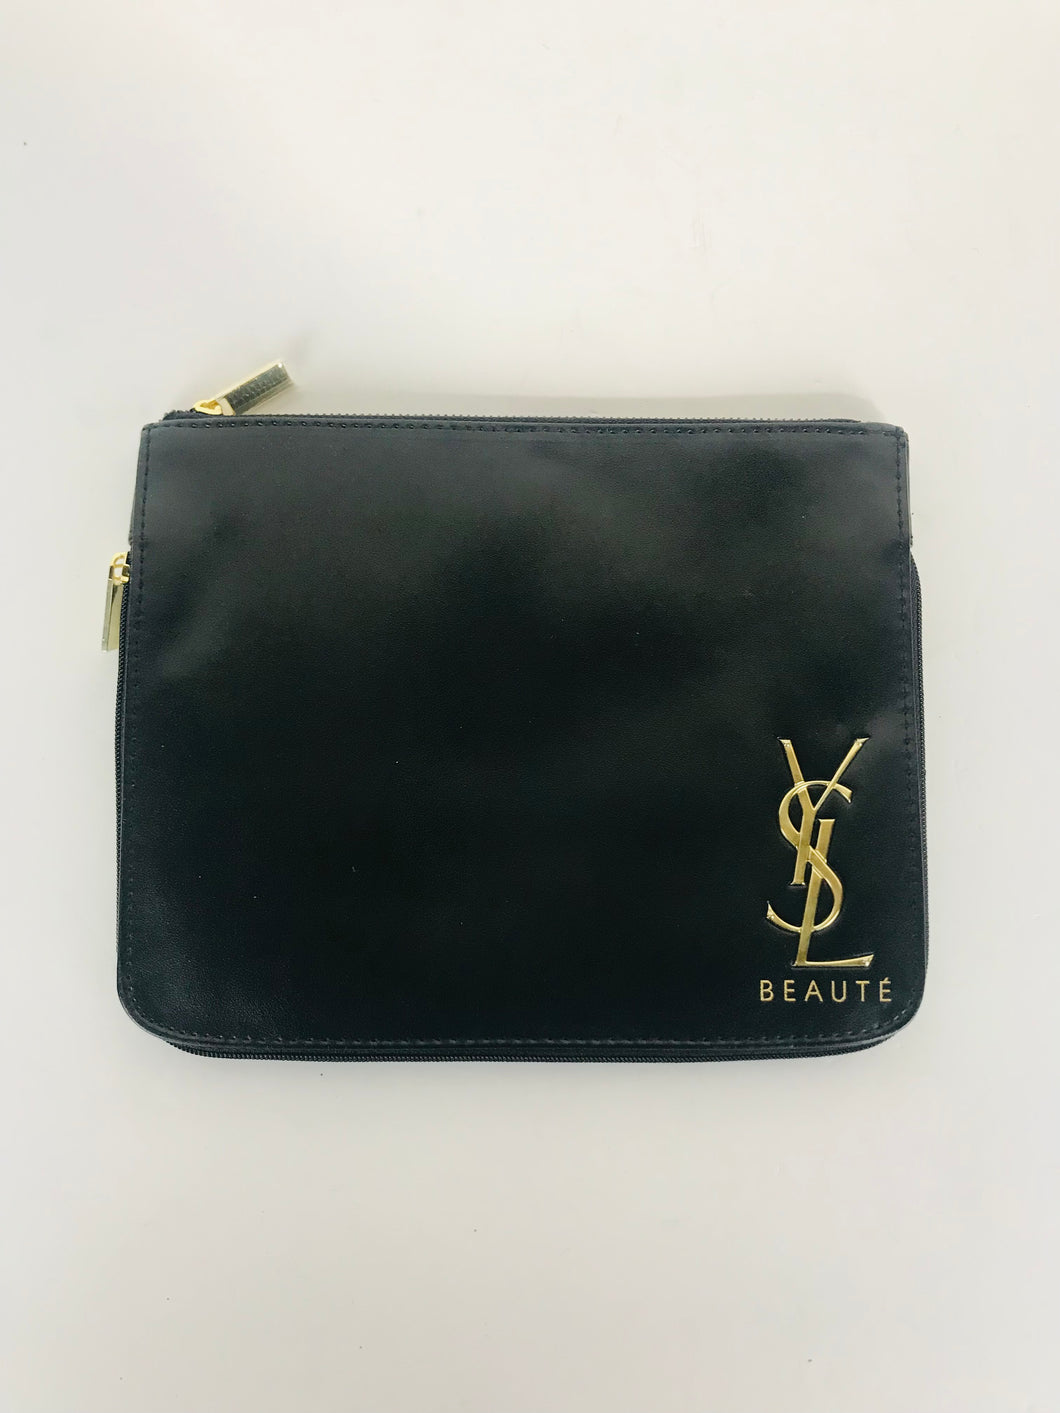 YSL Beauté Women's Cosmetic Bag Purse | OS | Black